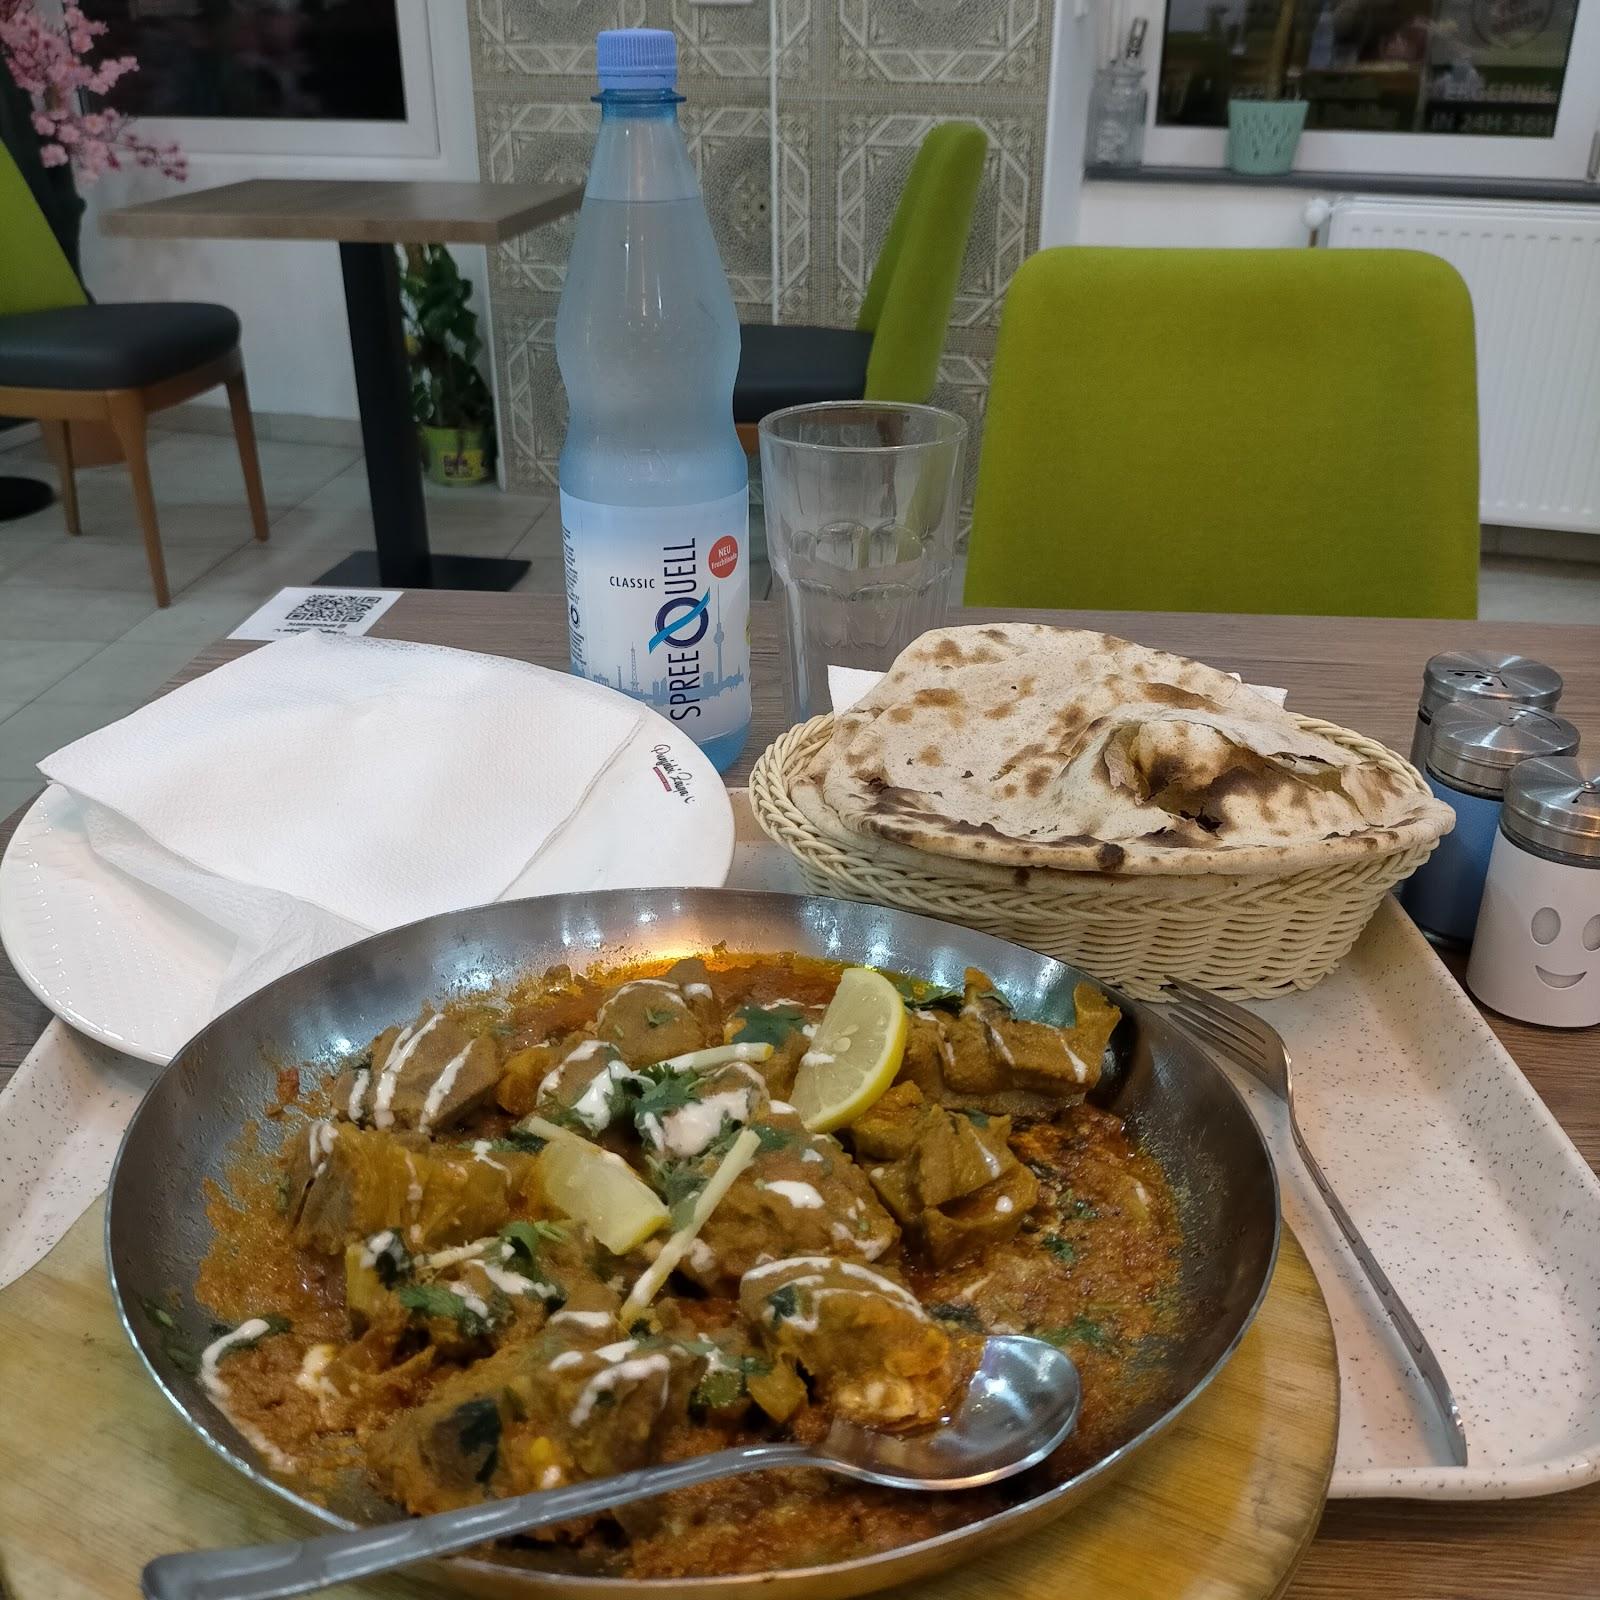 Restaurant "Punjabi Zaiqa- Originale Pakistanische Küche" in Berlin